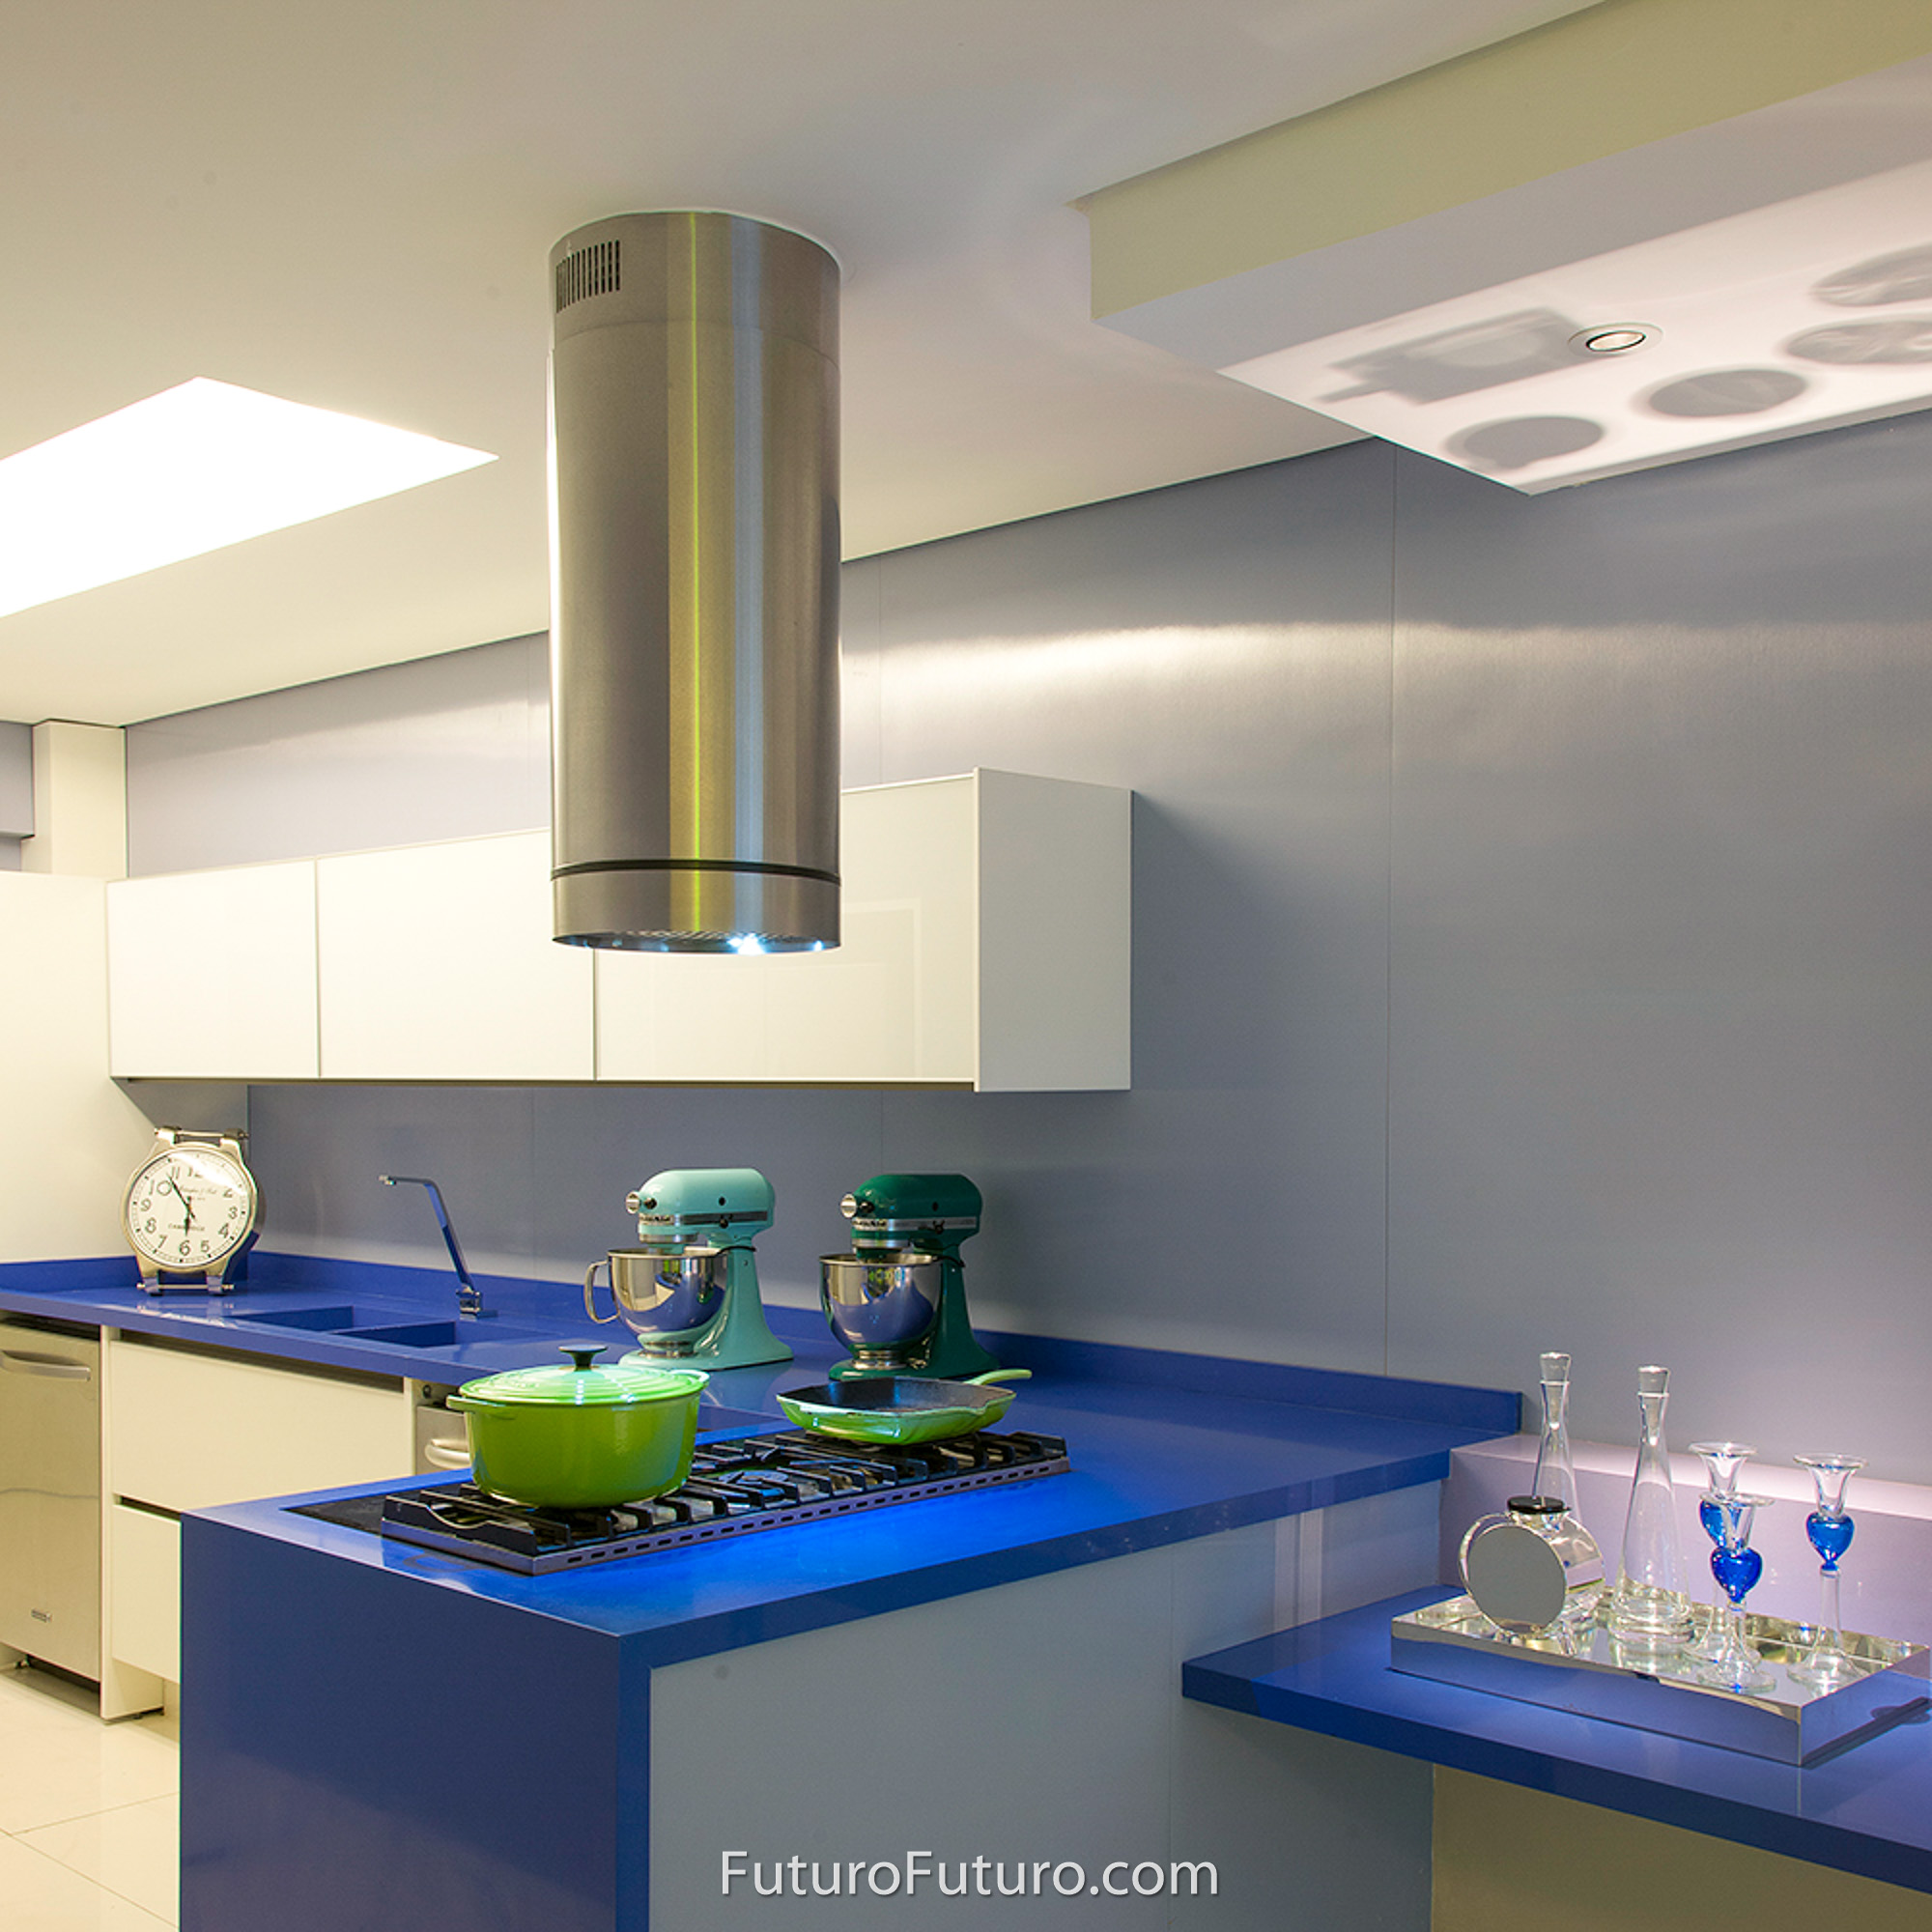 Design Quasar. Bring your kitchen into the future.  Kitchen hood design,  Kitchen interior, Kitchen hood ideas